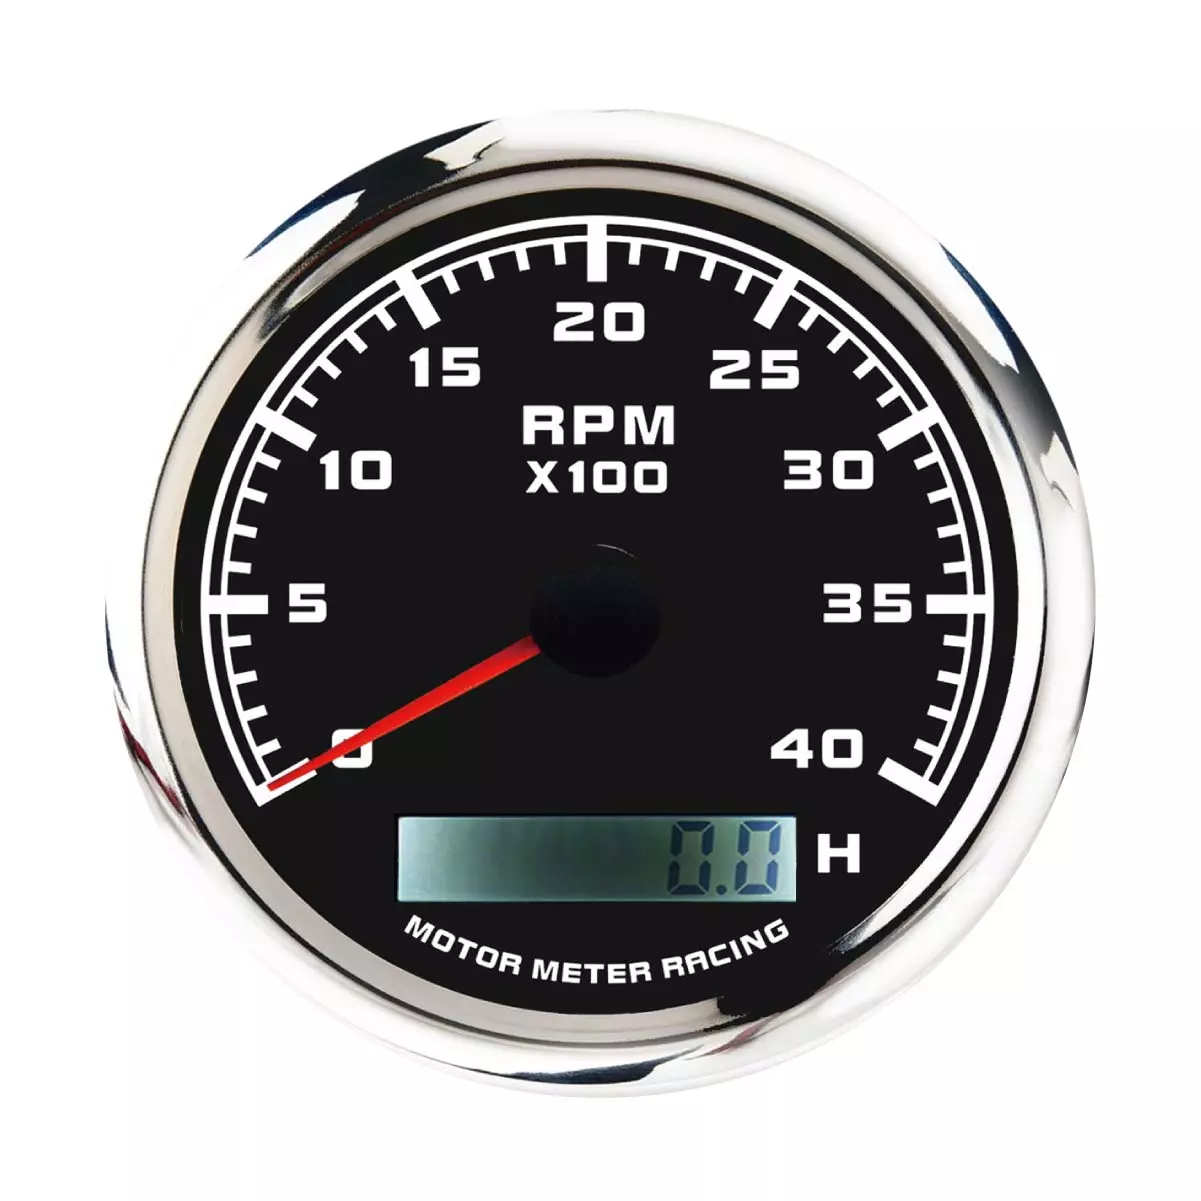 MOTOR METER RACING 3-3/4 95mm Tachometer for Gasoline 11,000 RPM Built-in Shift Light on Dashboard